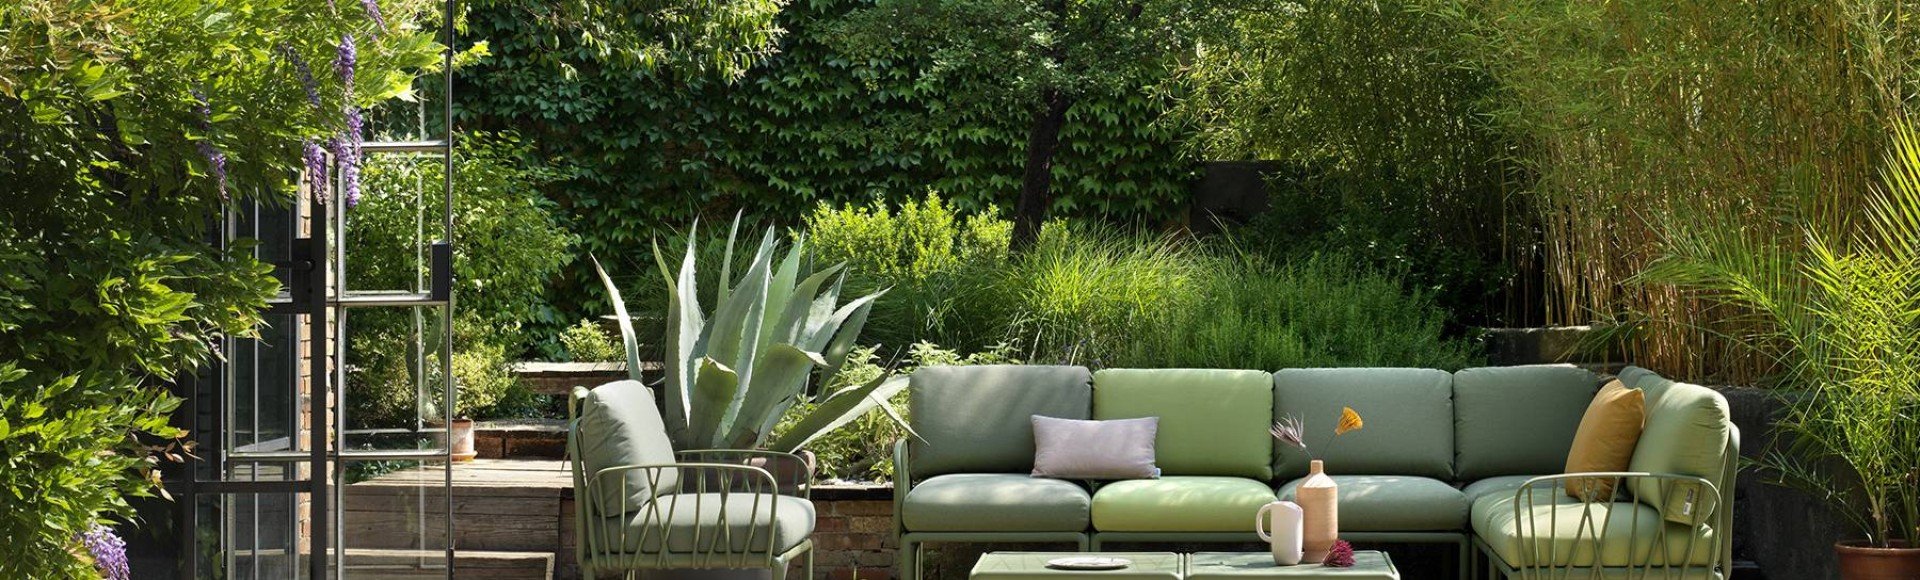 Nardi outdoor furniture by Designrattan